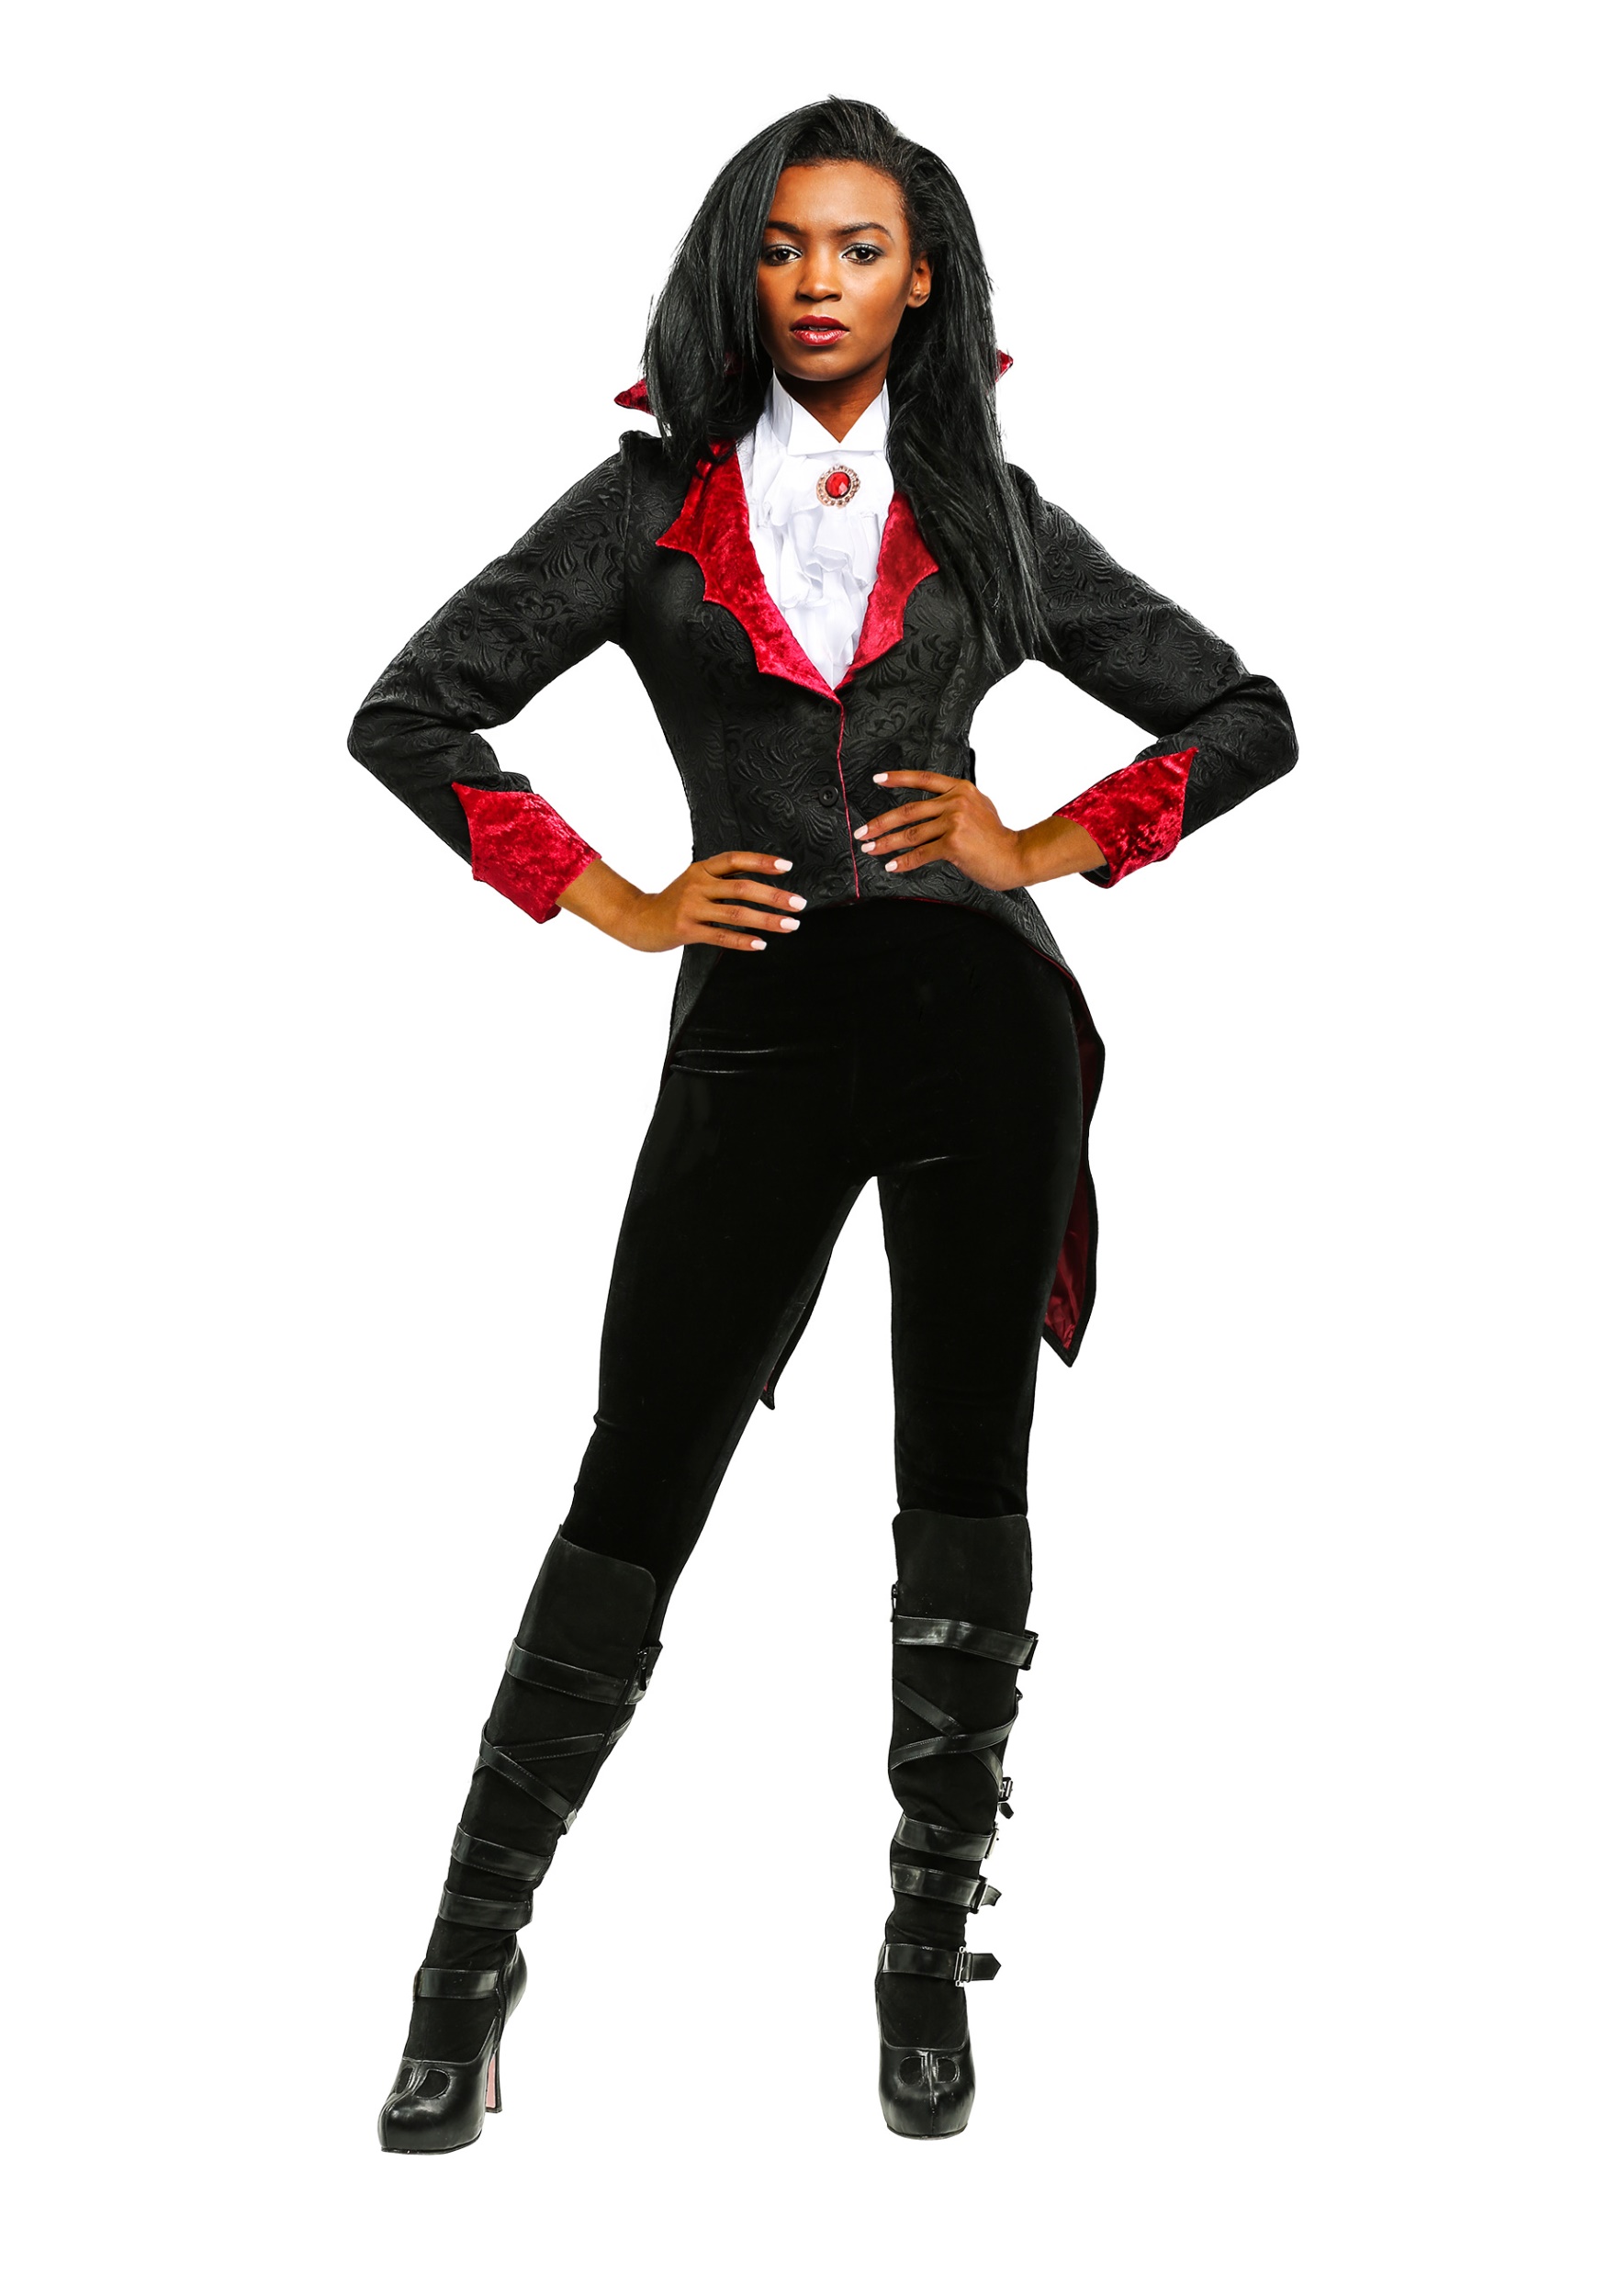 Photos - Fancy Dress FUN Costumes Dashing Vampiress Women's Costume Black/Red/White FUN